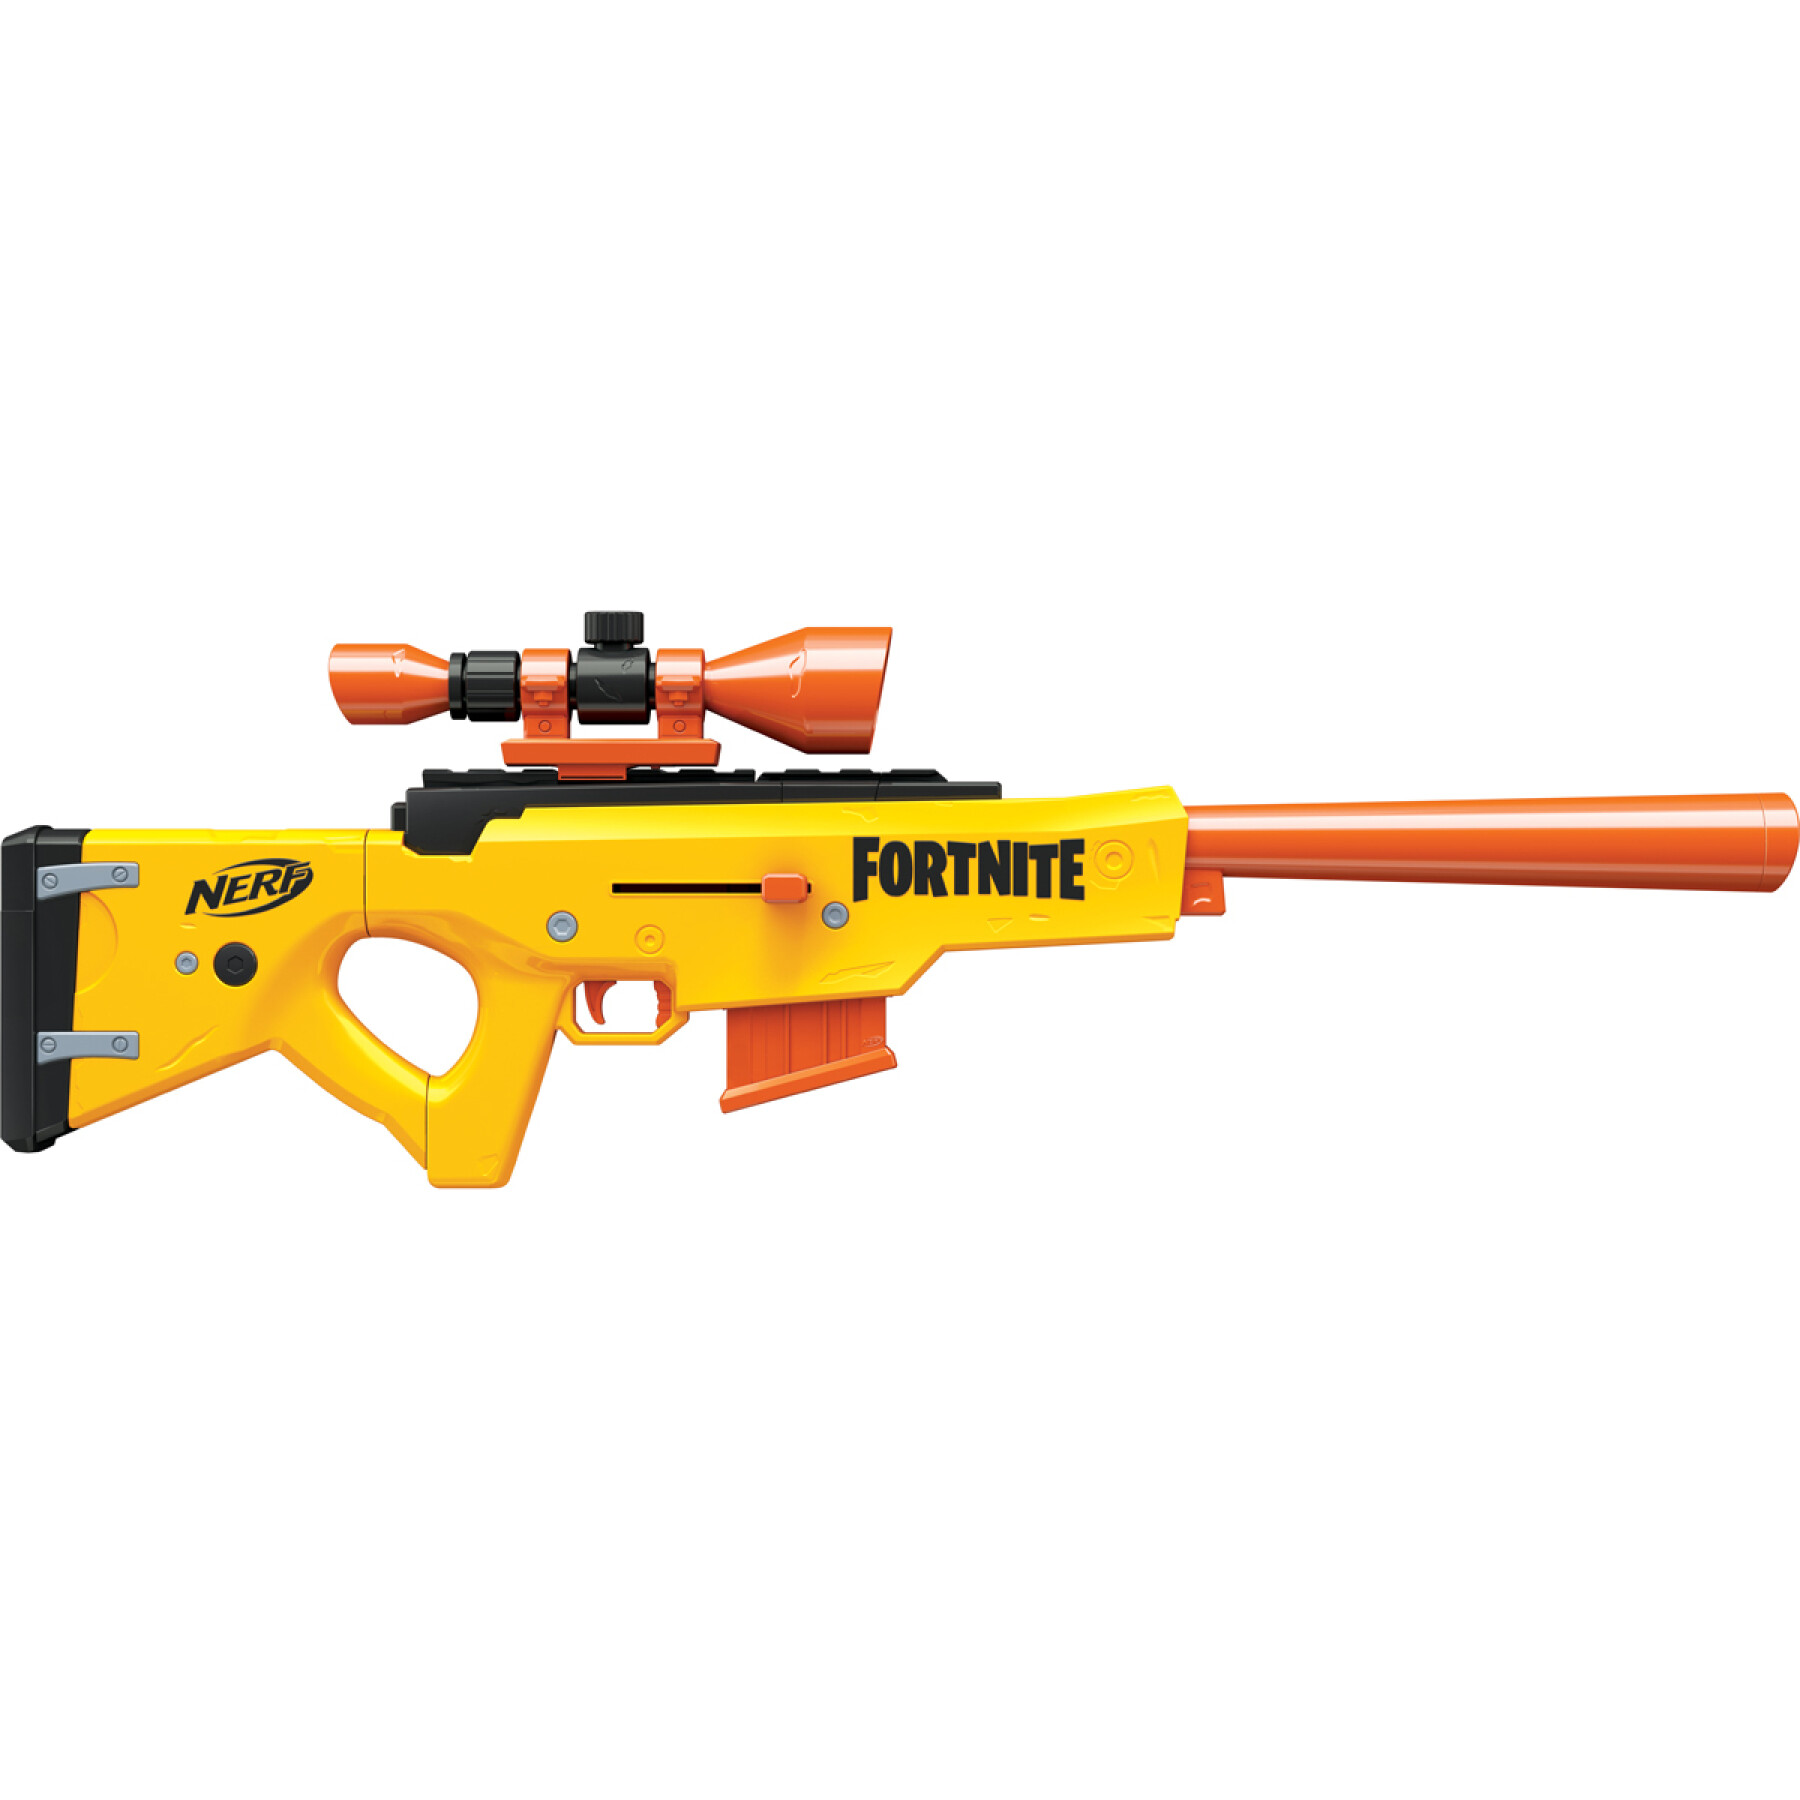 Pistolet et flechettes Nerf Fortnite Officielles jaune orange - La